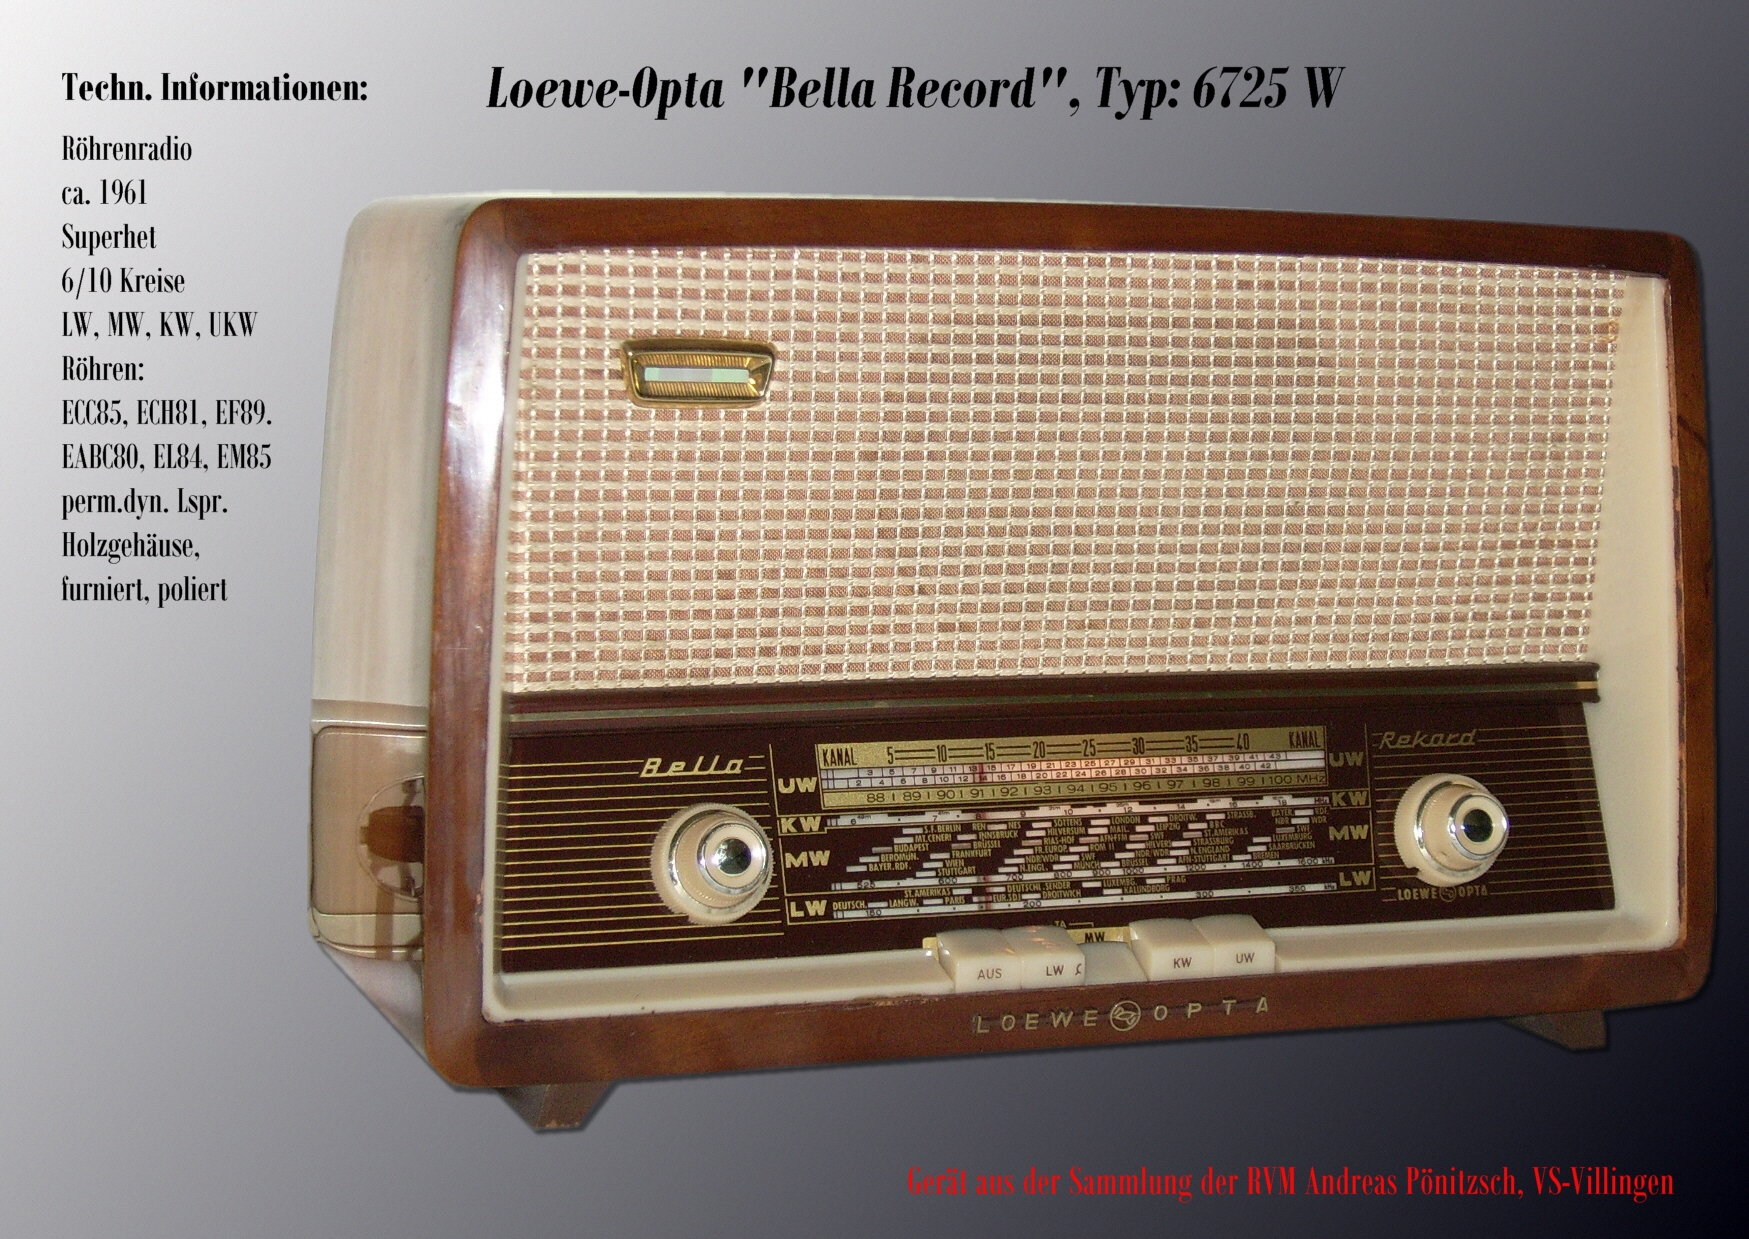 Loewe-Opta Bella Record 6725 W